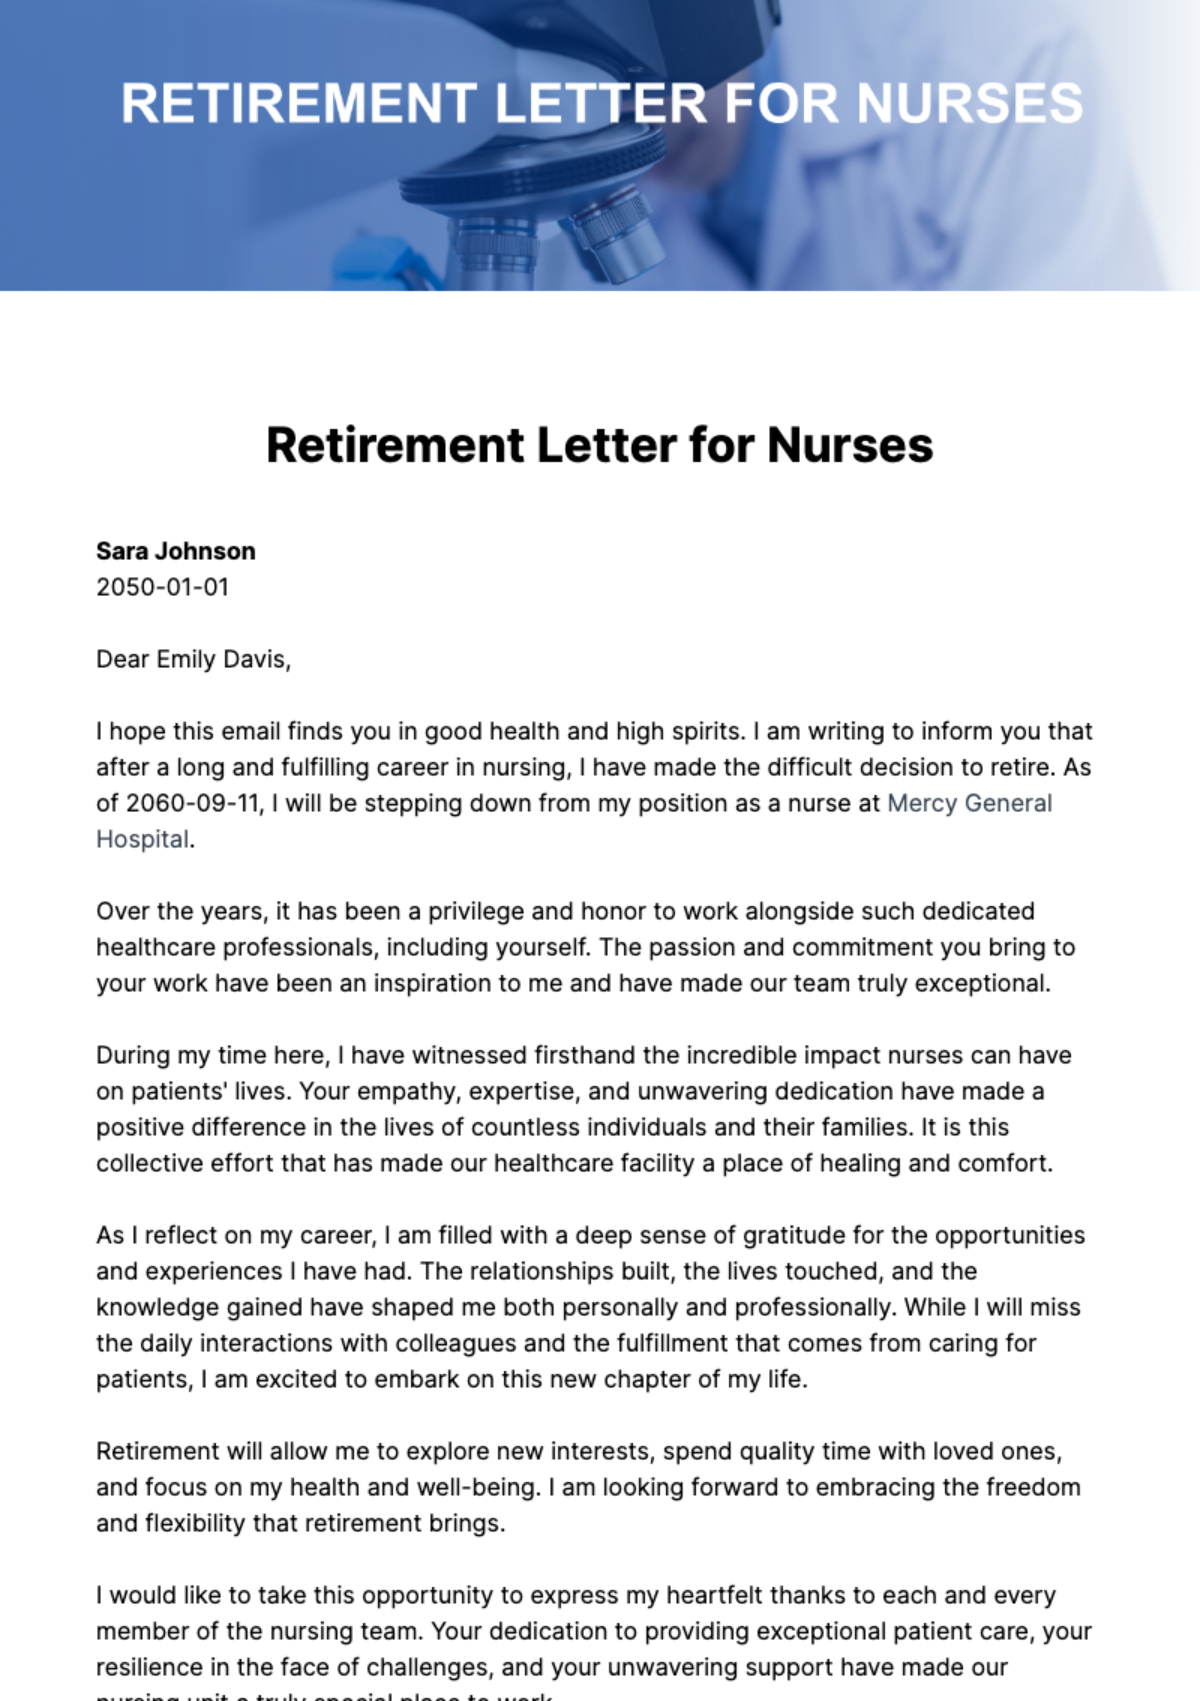 Free Retirement Letter For Nurses Template